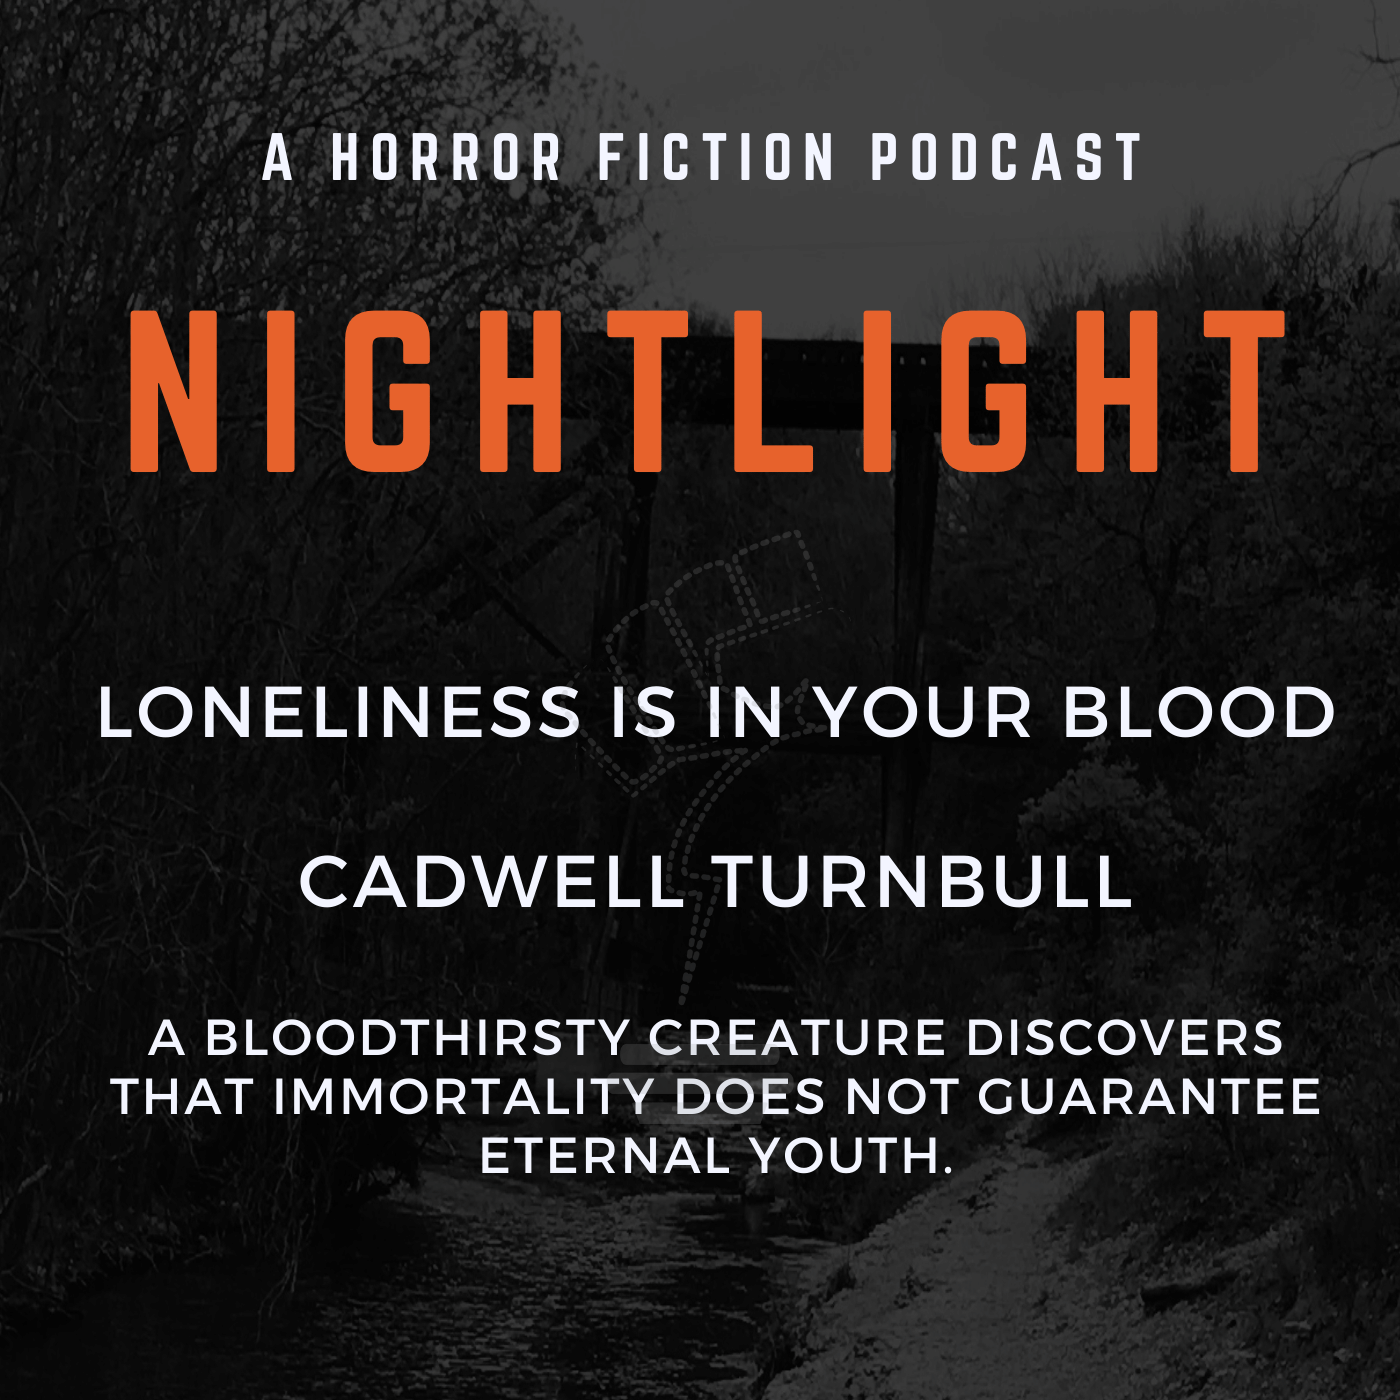 Artwork for podcast NIGHTLIGHT: A Horror Fiction Podcast